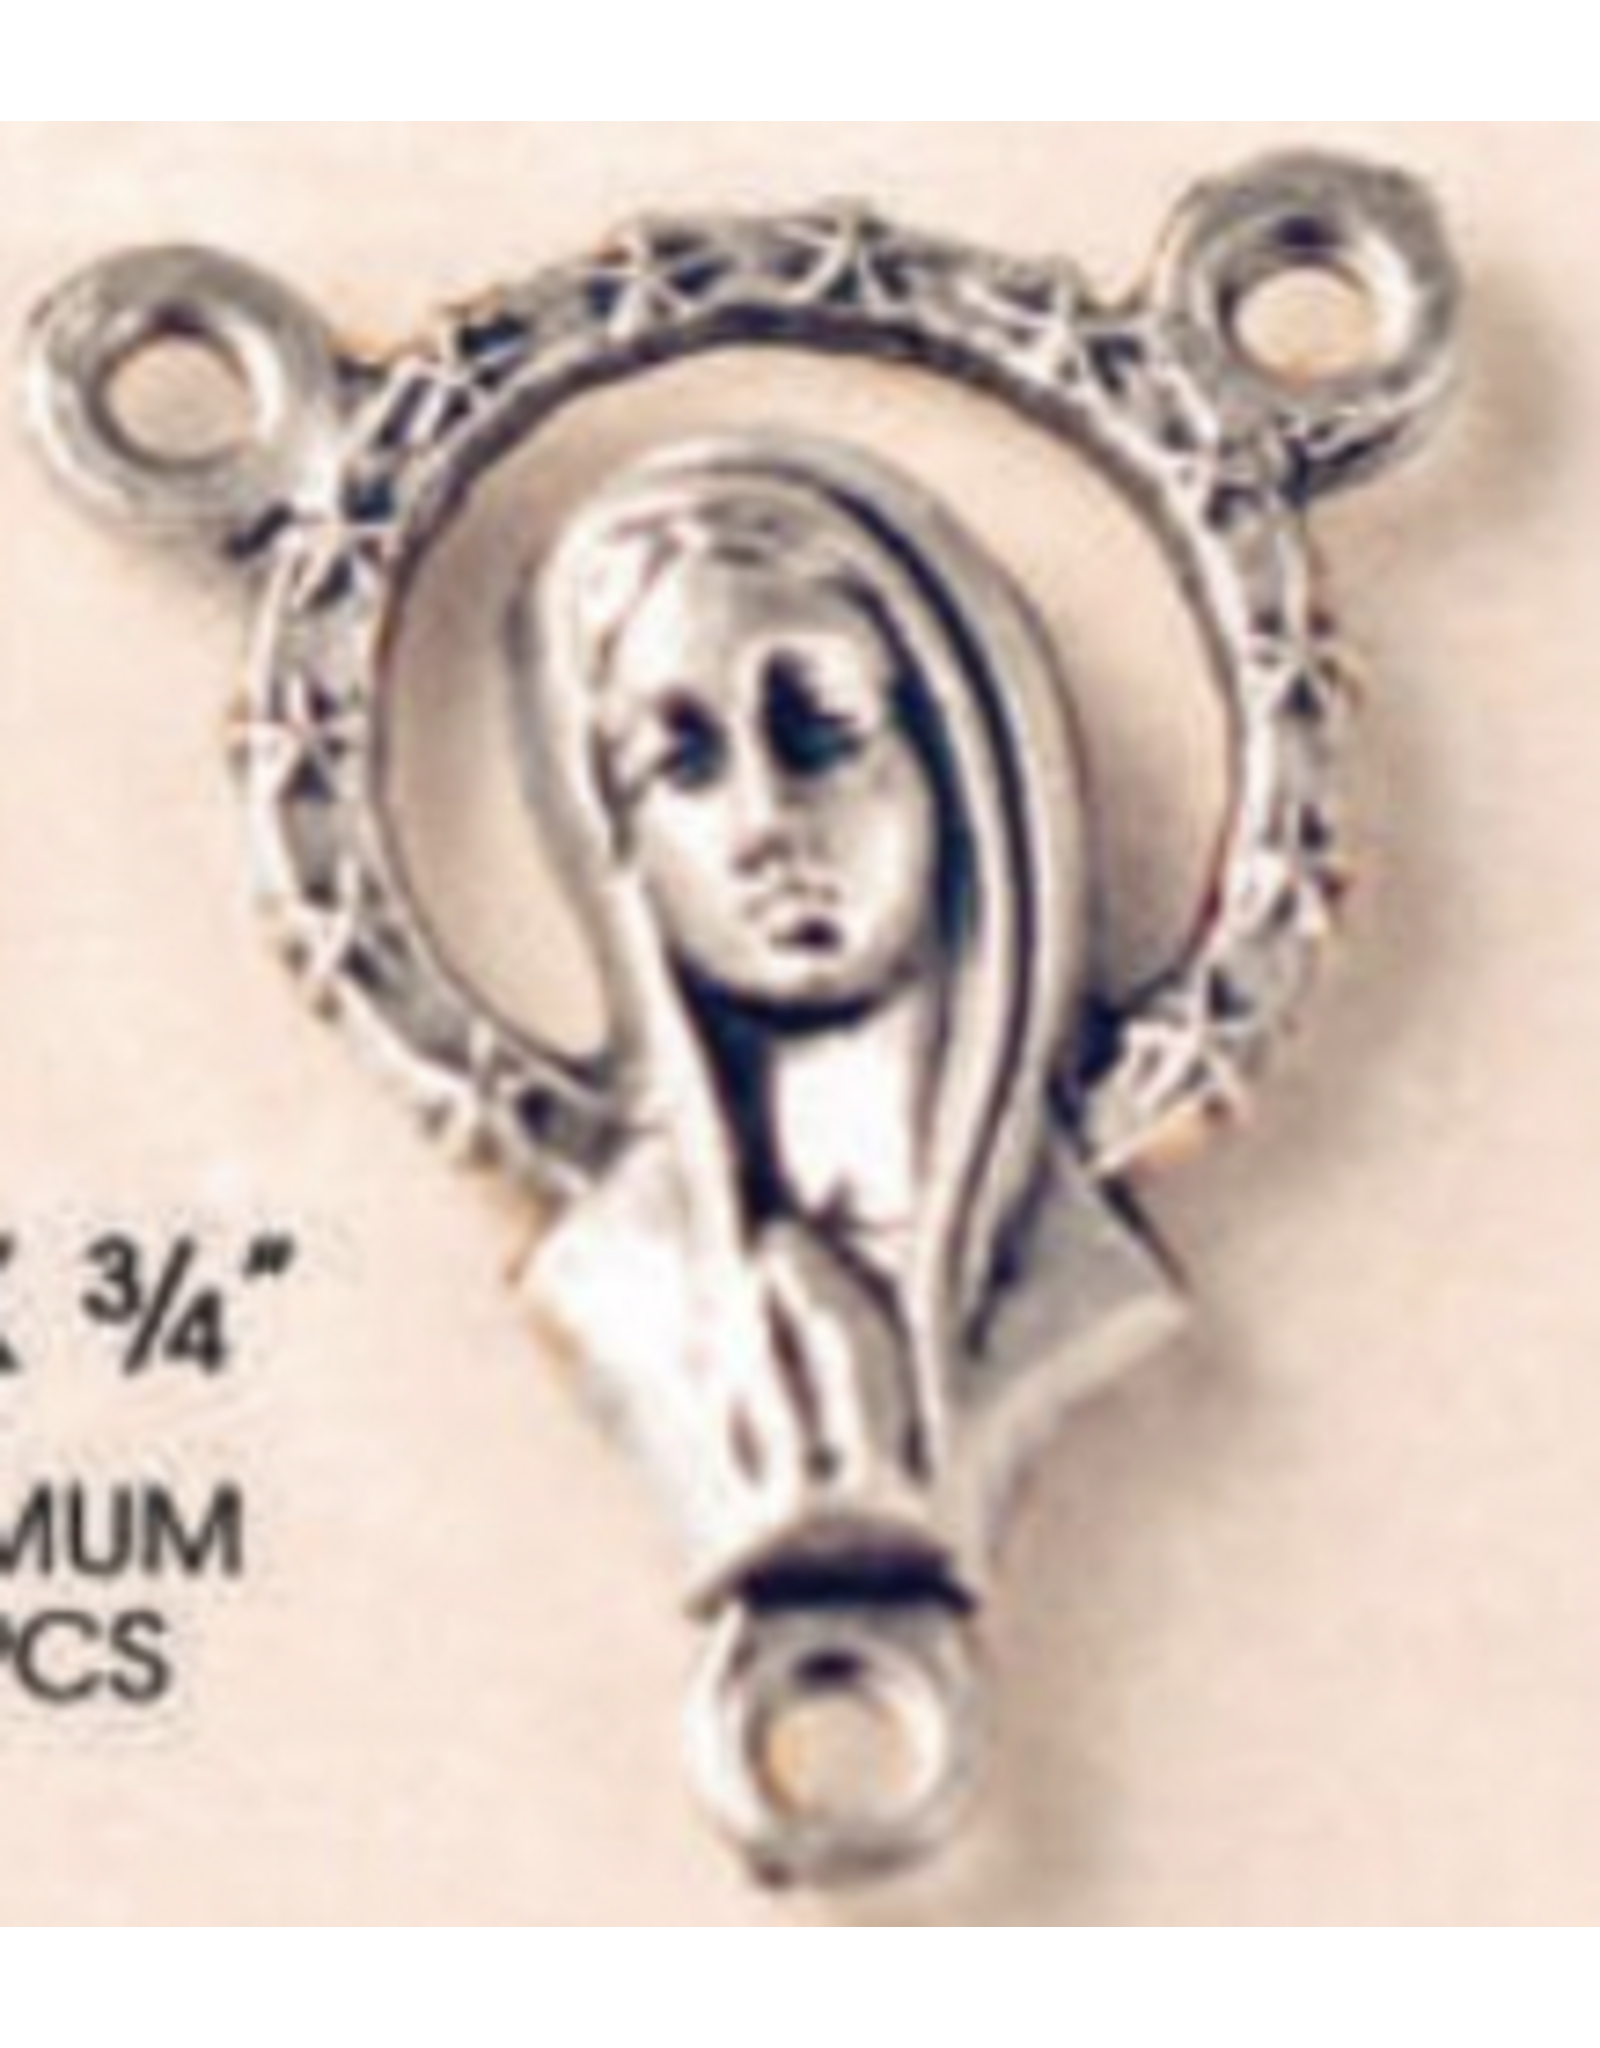 San Francis Rosary Centerpiece - Mary's Face, Silver